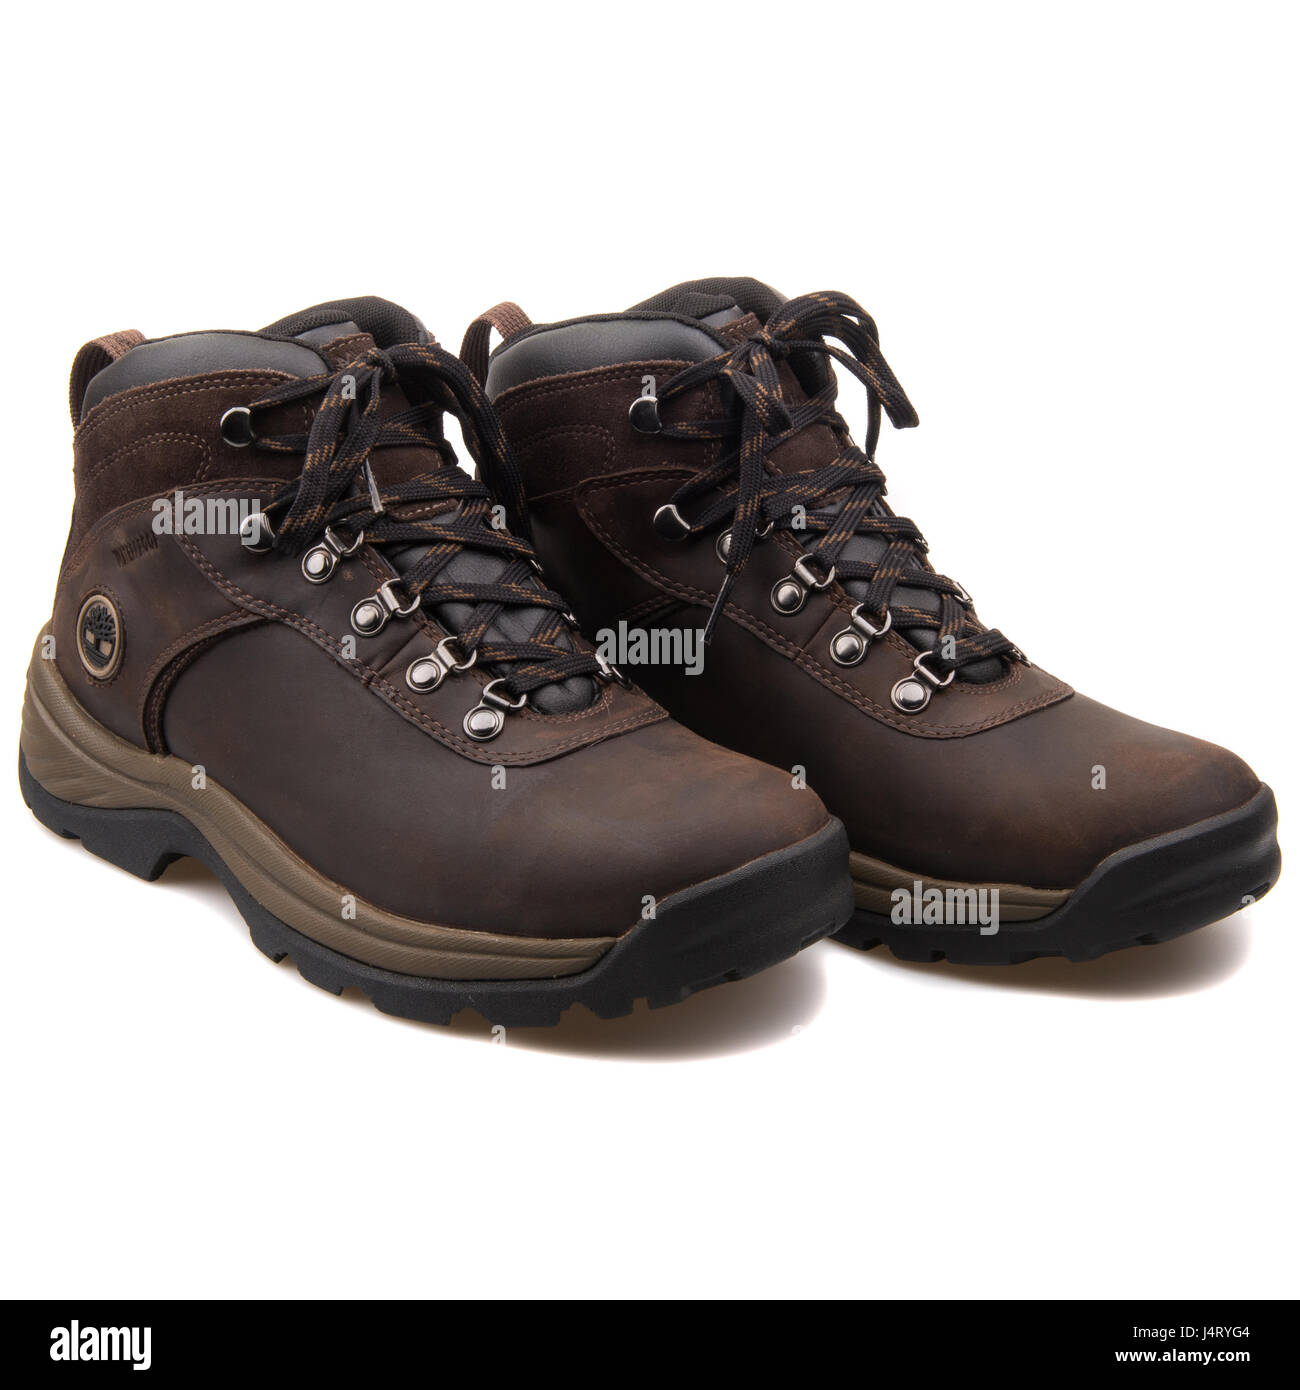 Timberland Flume Waterproof Medium Wide Hiking Leather Boot Dark Brown -  18128 Stock Photo - Alamy